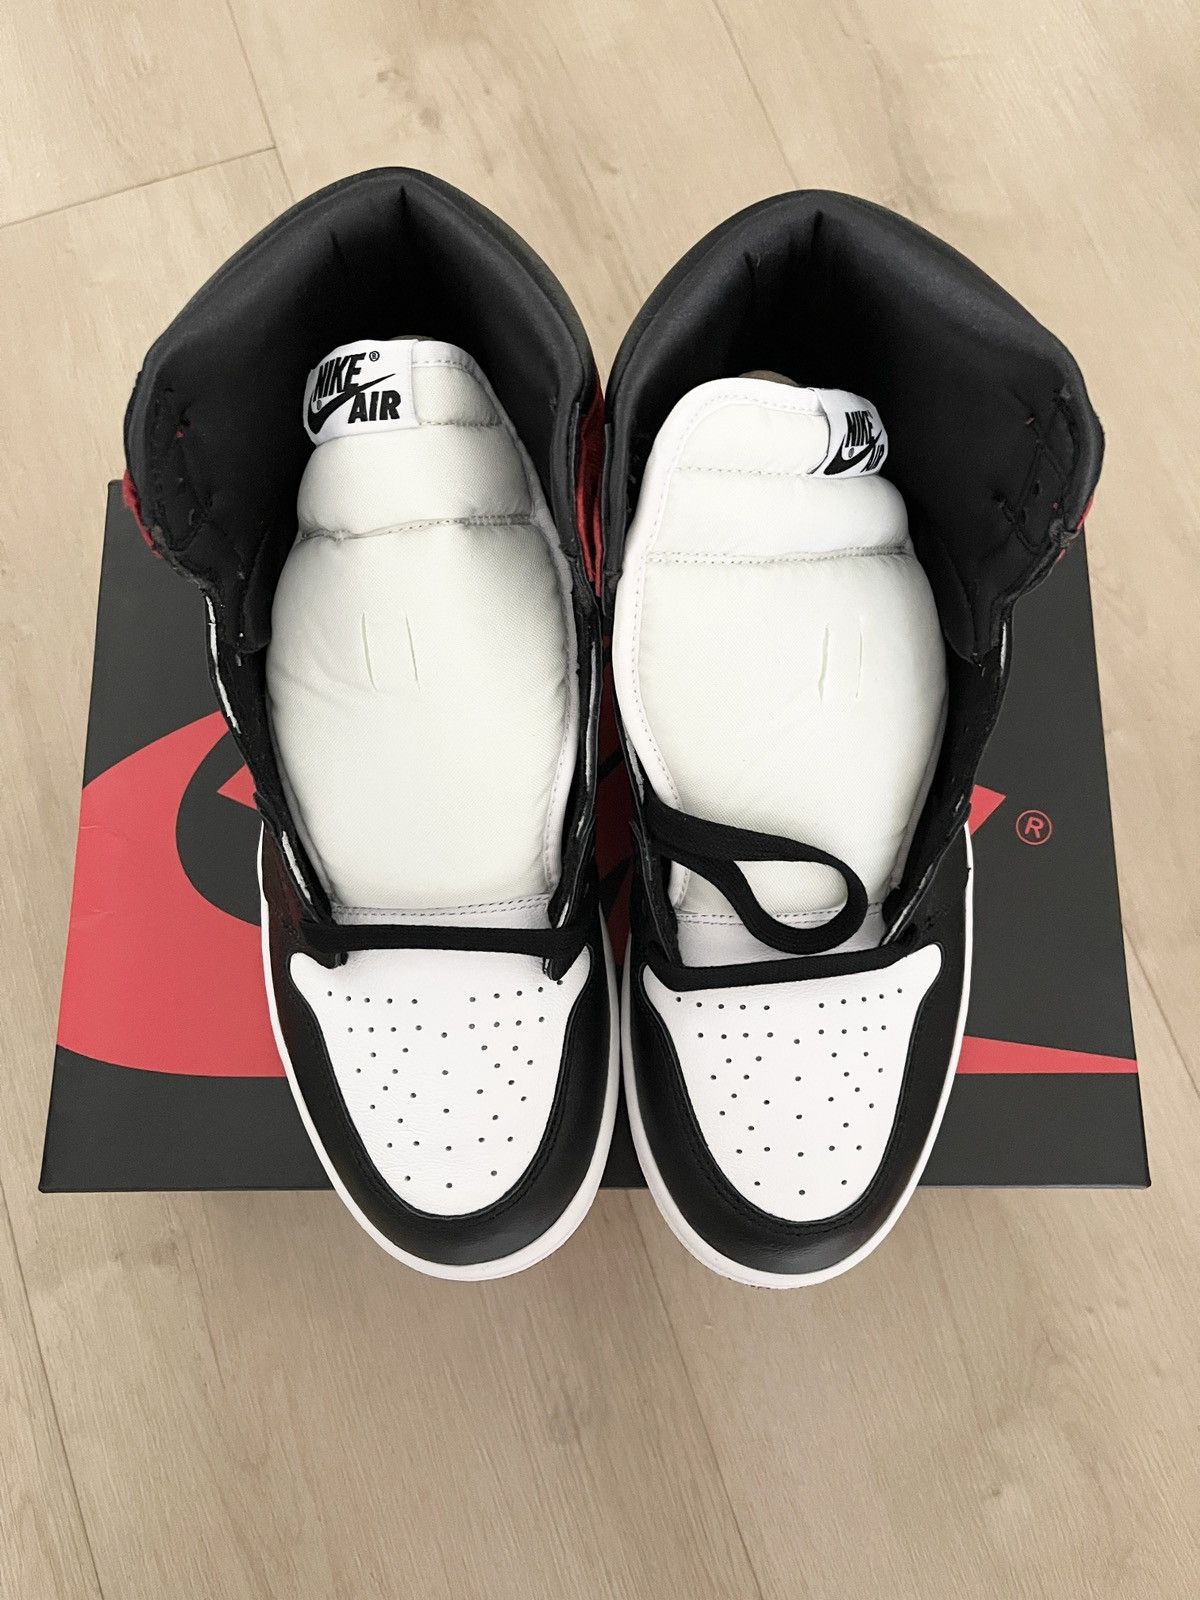 Jordan Brand - 2019 Air Jordan 1 High Saint Black Toe (Men Size 7.5) - 4